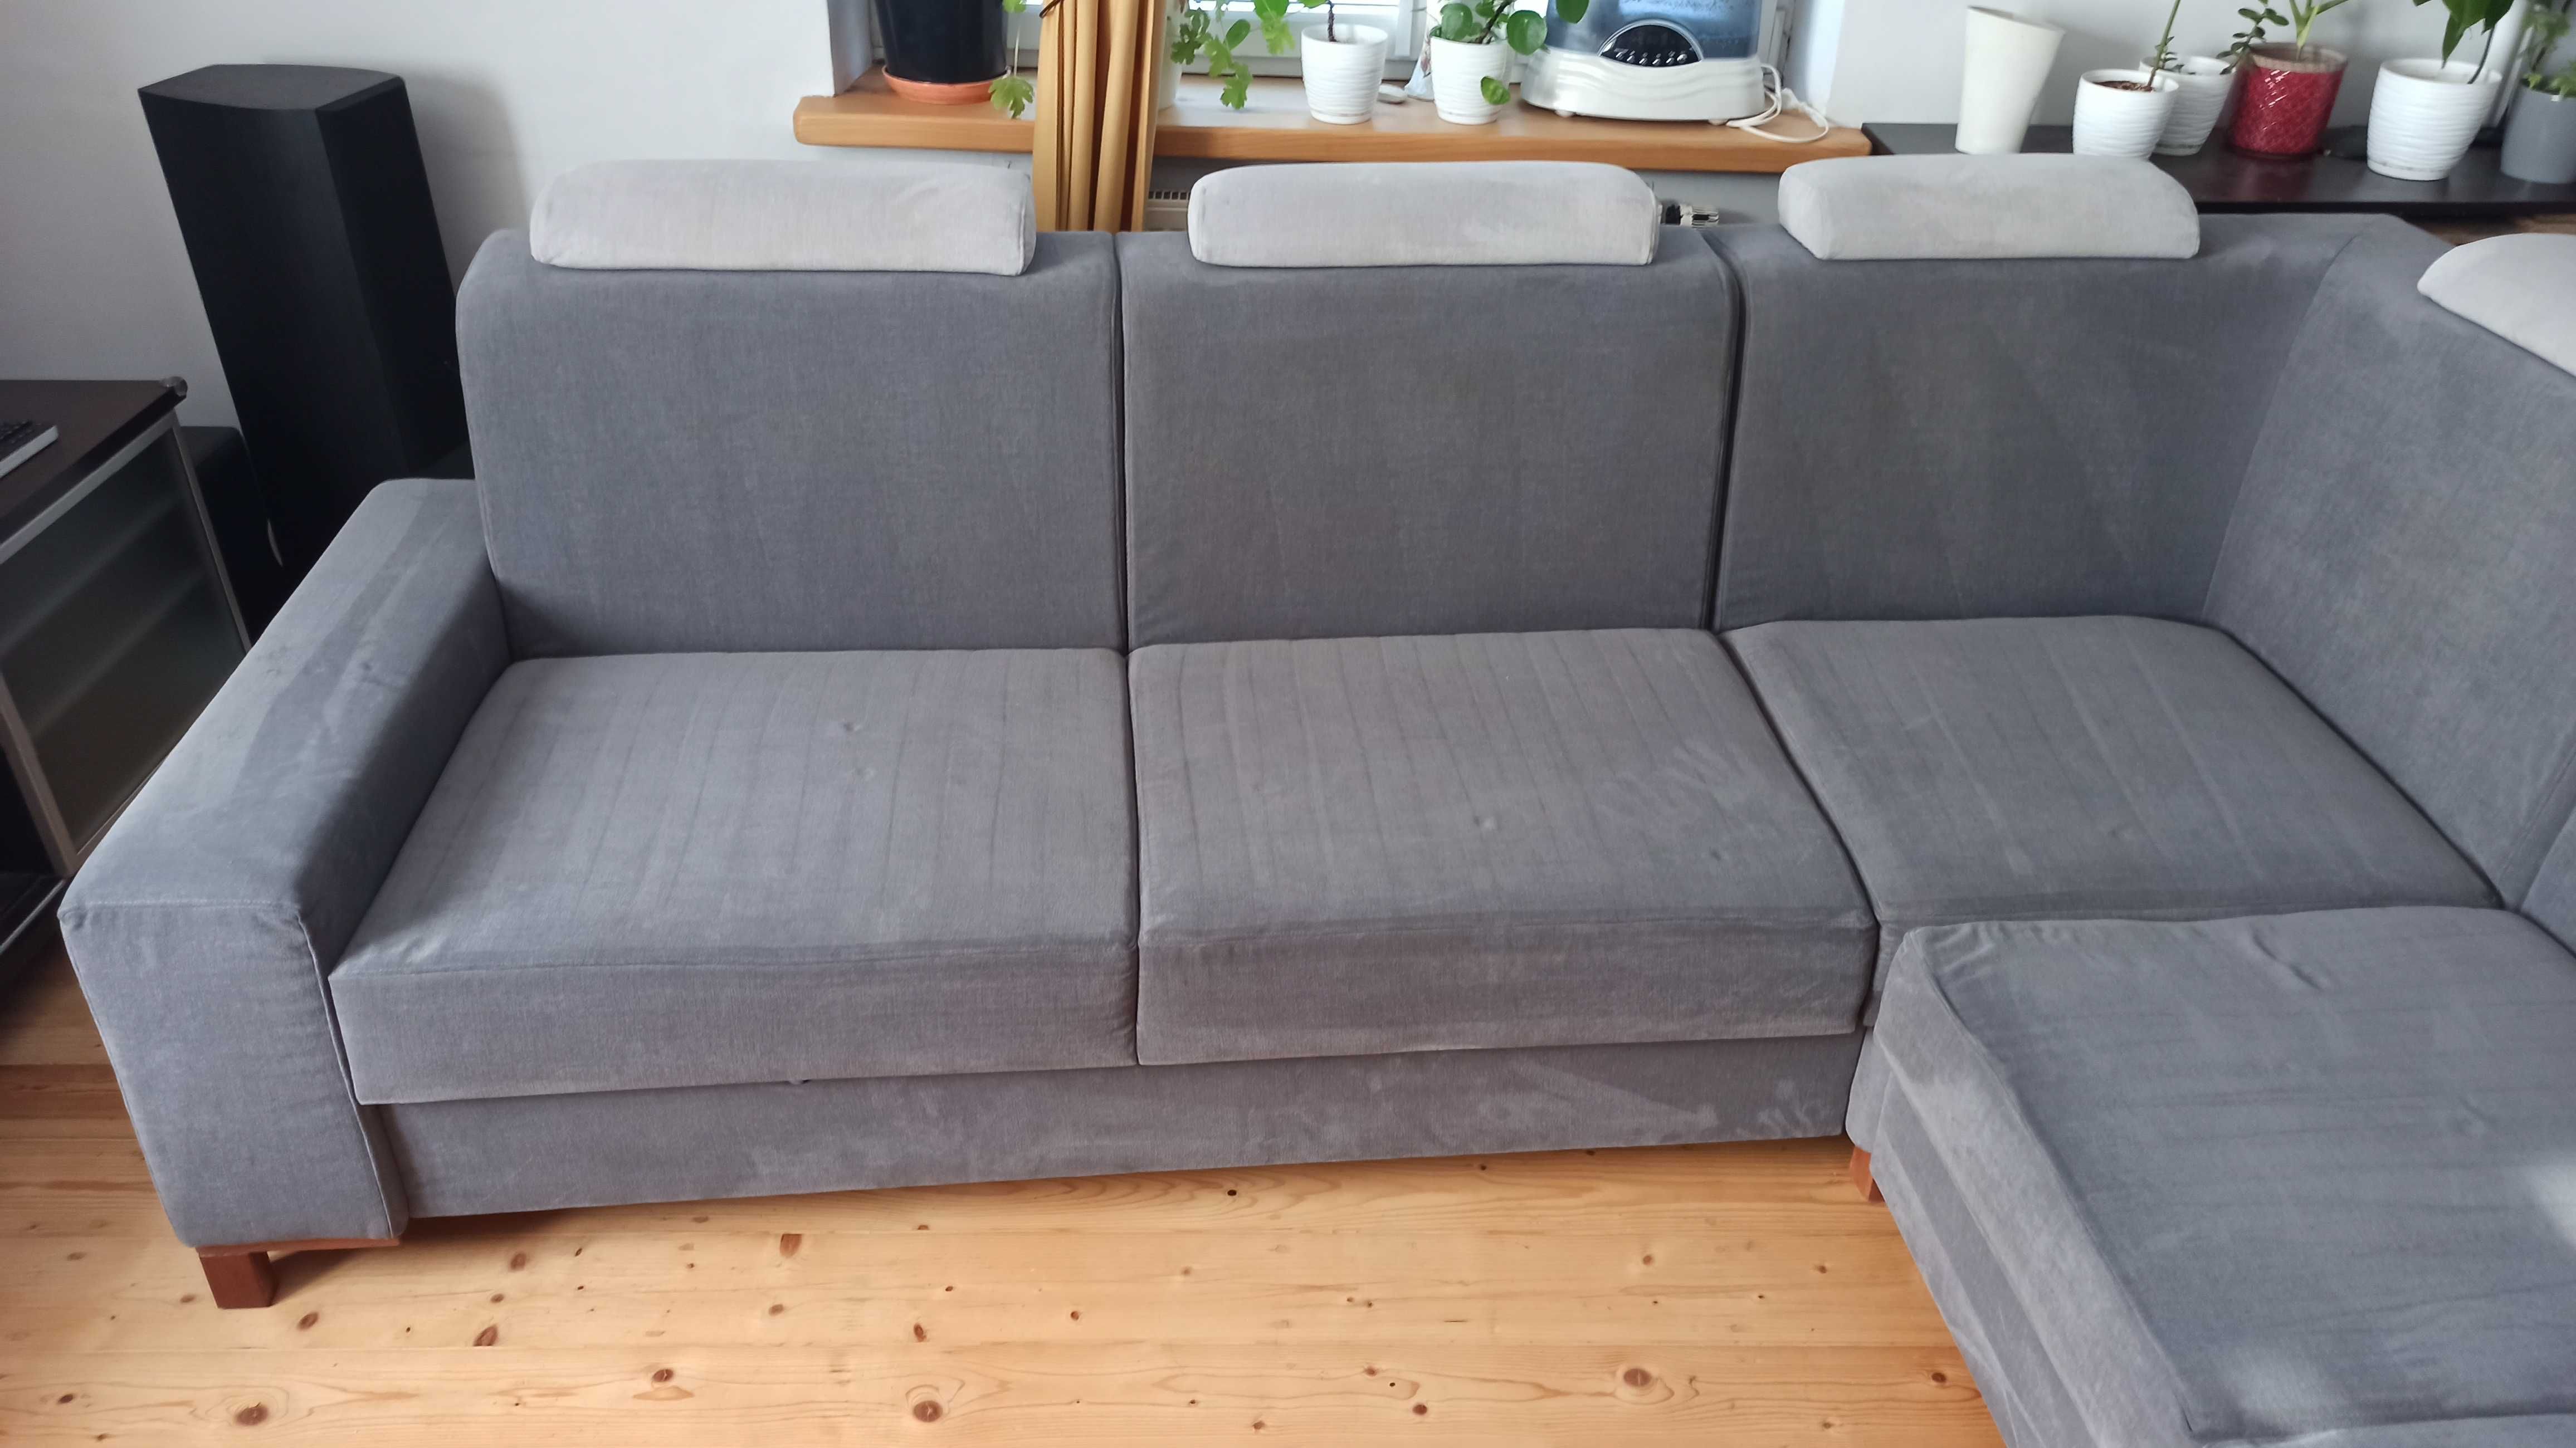 Klasa premium narożnik Unimebel 250x250 funkcja spania - rogówka sofa